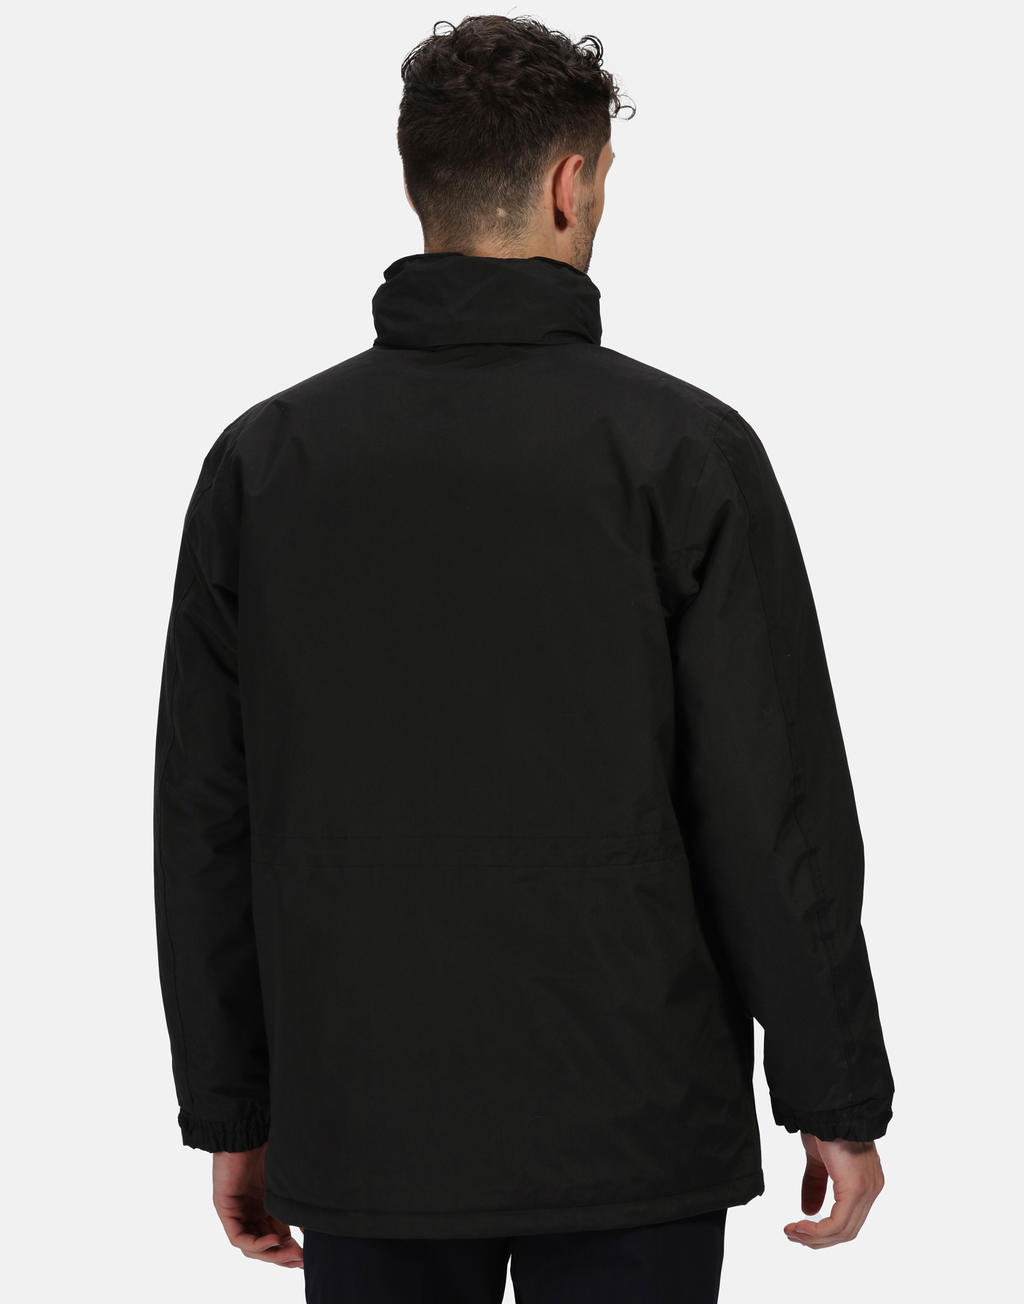  Darby III Jacket in Farbe Black